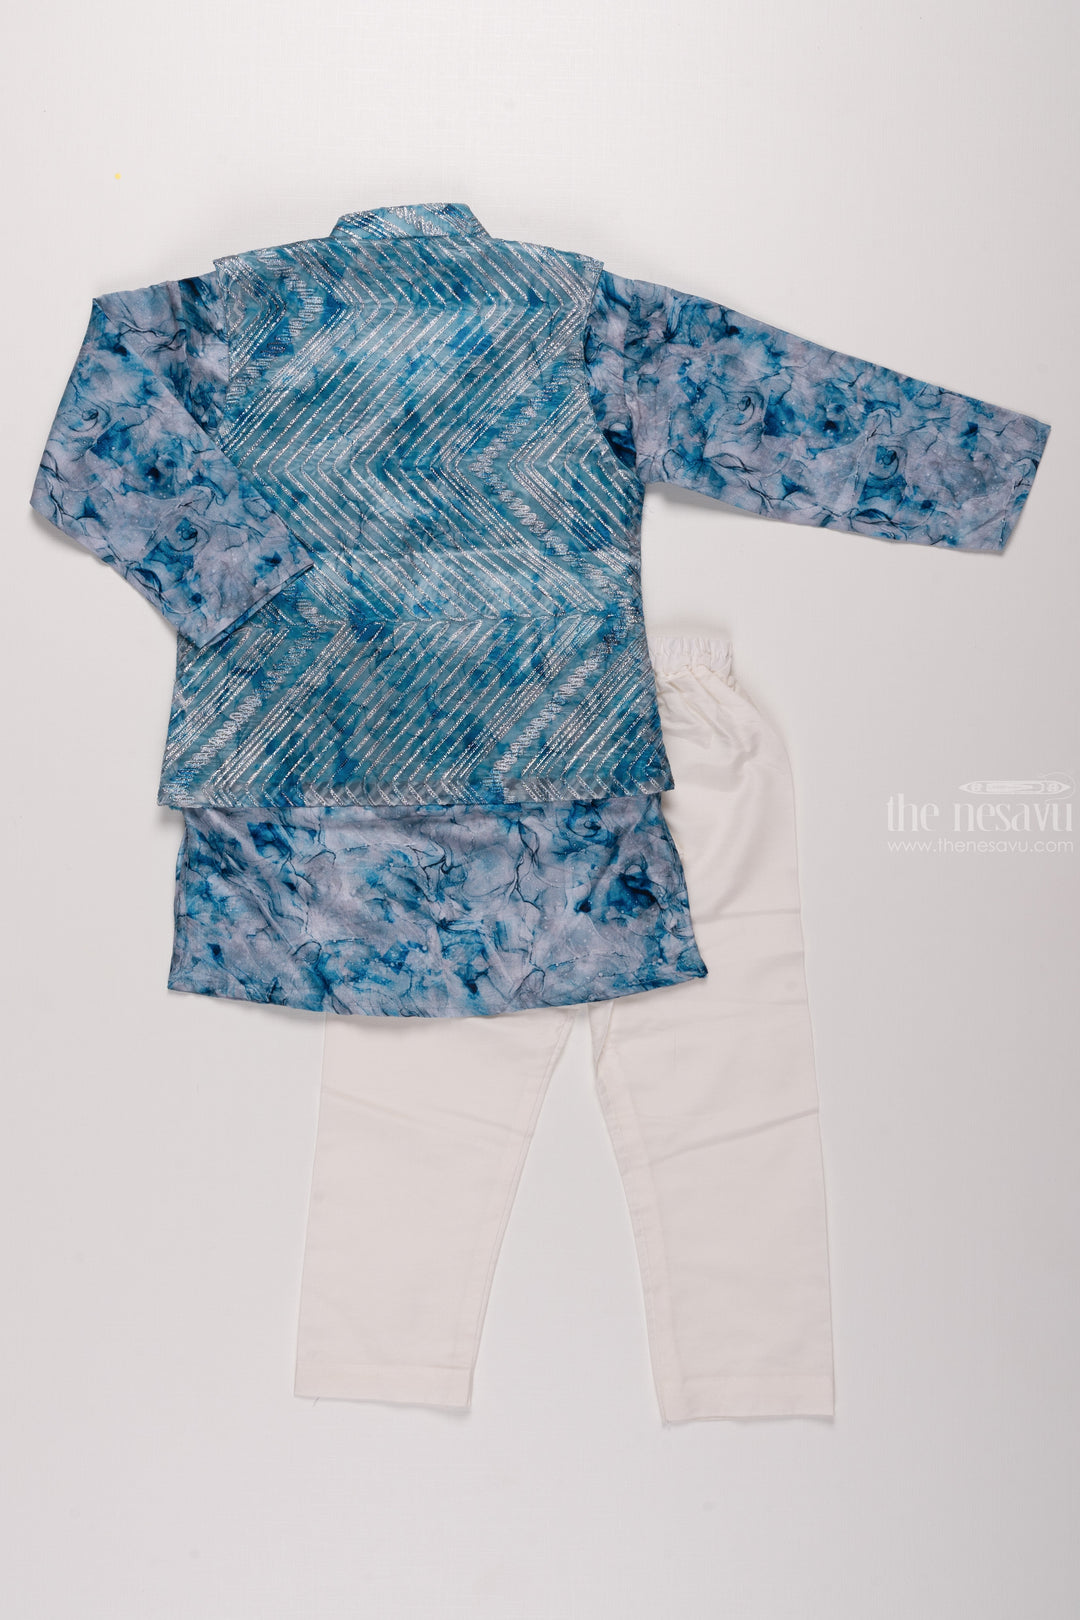 The Nesavu Boys Jacket Sets Boys Oceanic Blue Printed Ensemble with White Trousers & Ornate Brooch Detailing Nesavu Celebrate in Style | Latest Boys Overcoat Kurta Pant Collection | The Nesavu